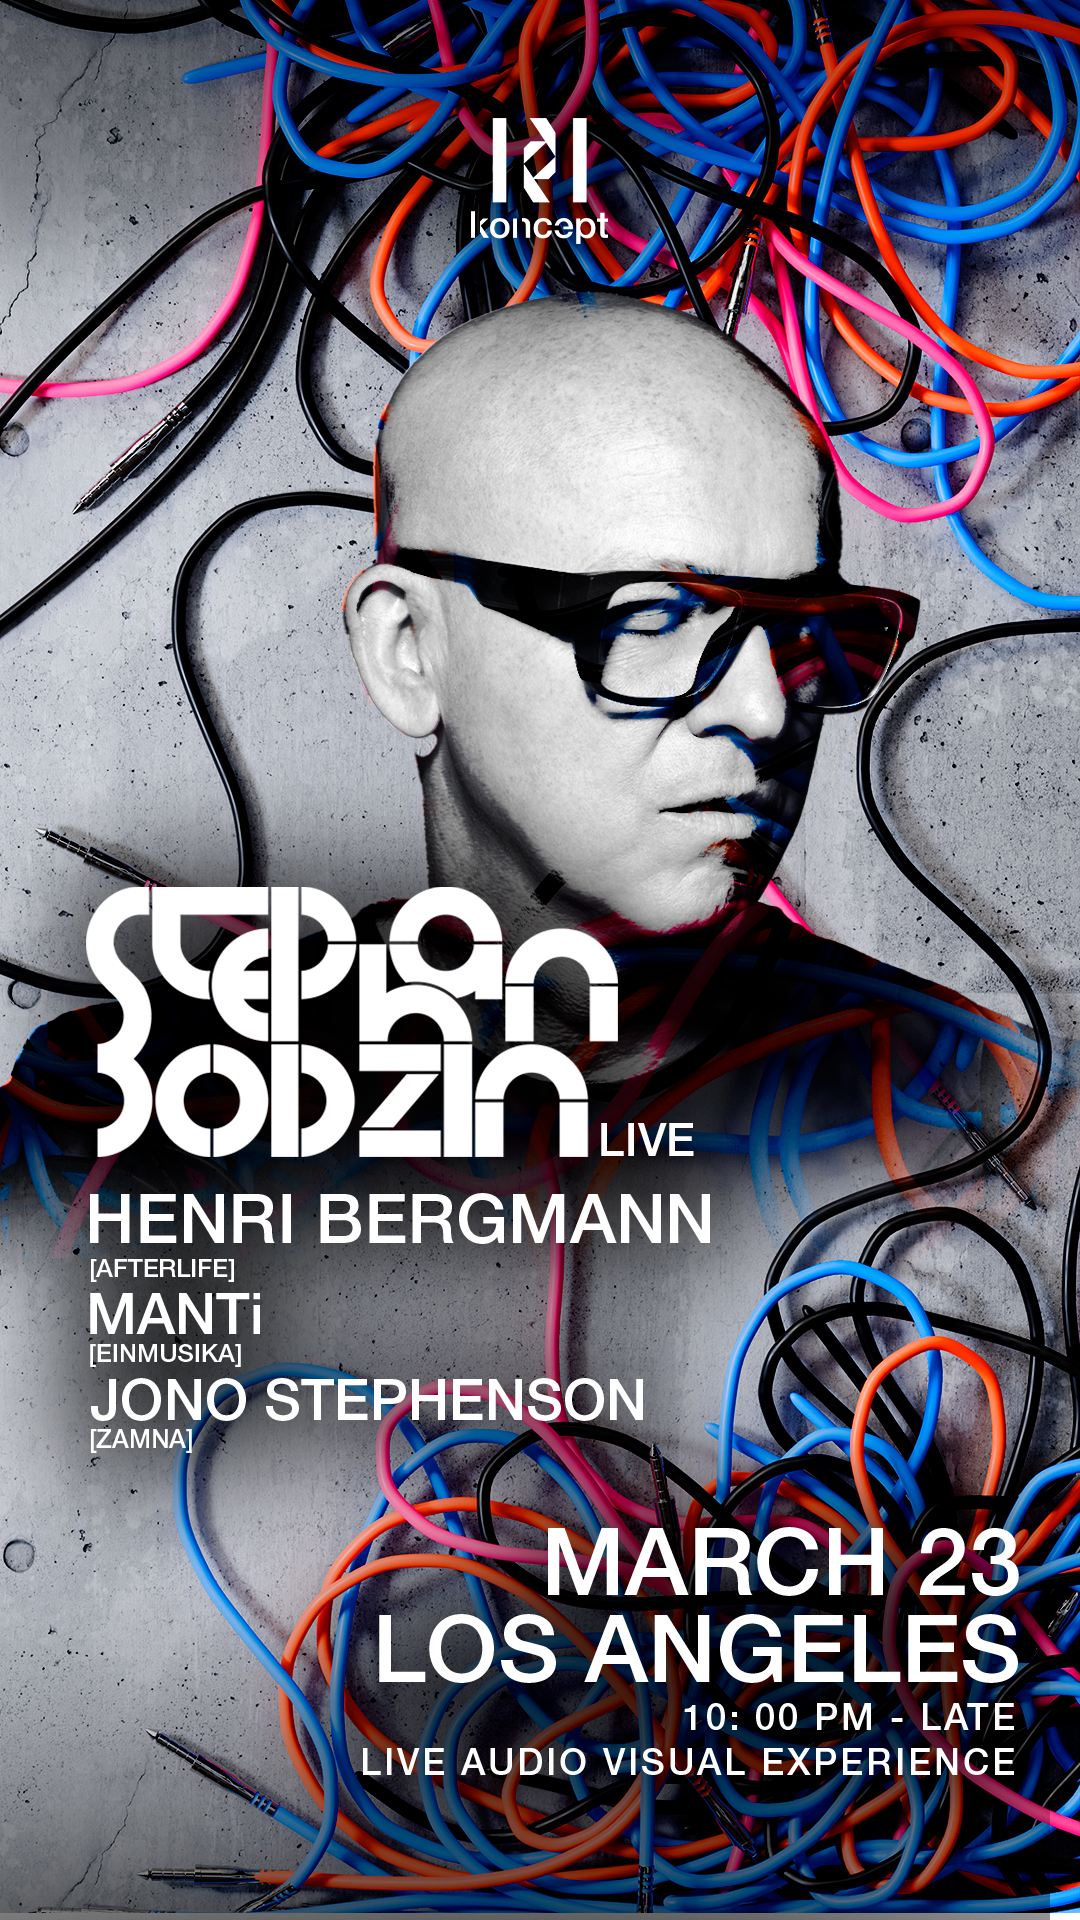 Koncept presents: Stephan Bodzin (Live) + Henri Bergmann (Afterlife) Live AV Experience - フライヤー表